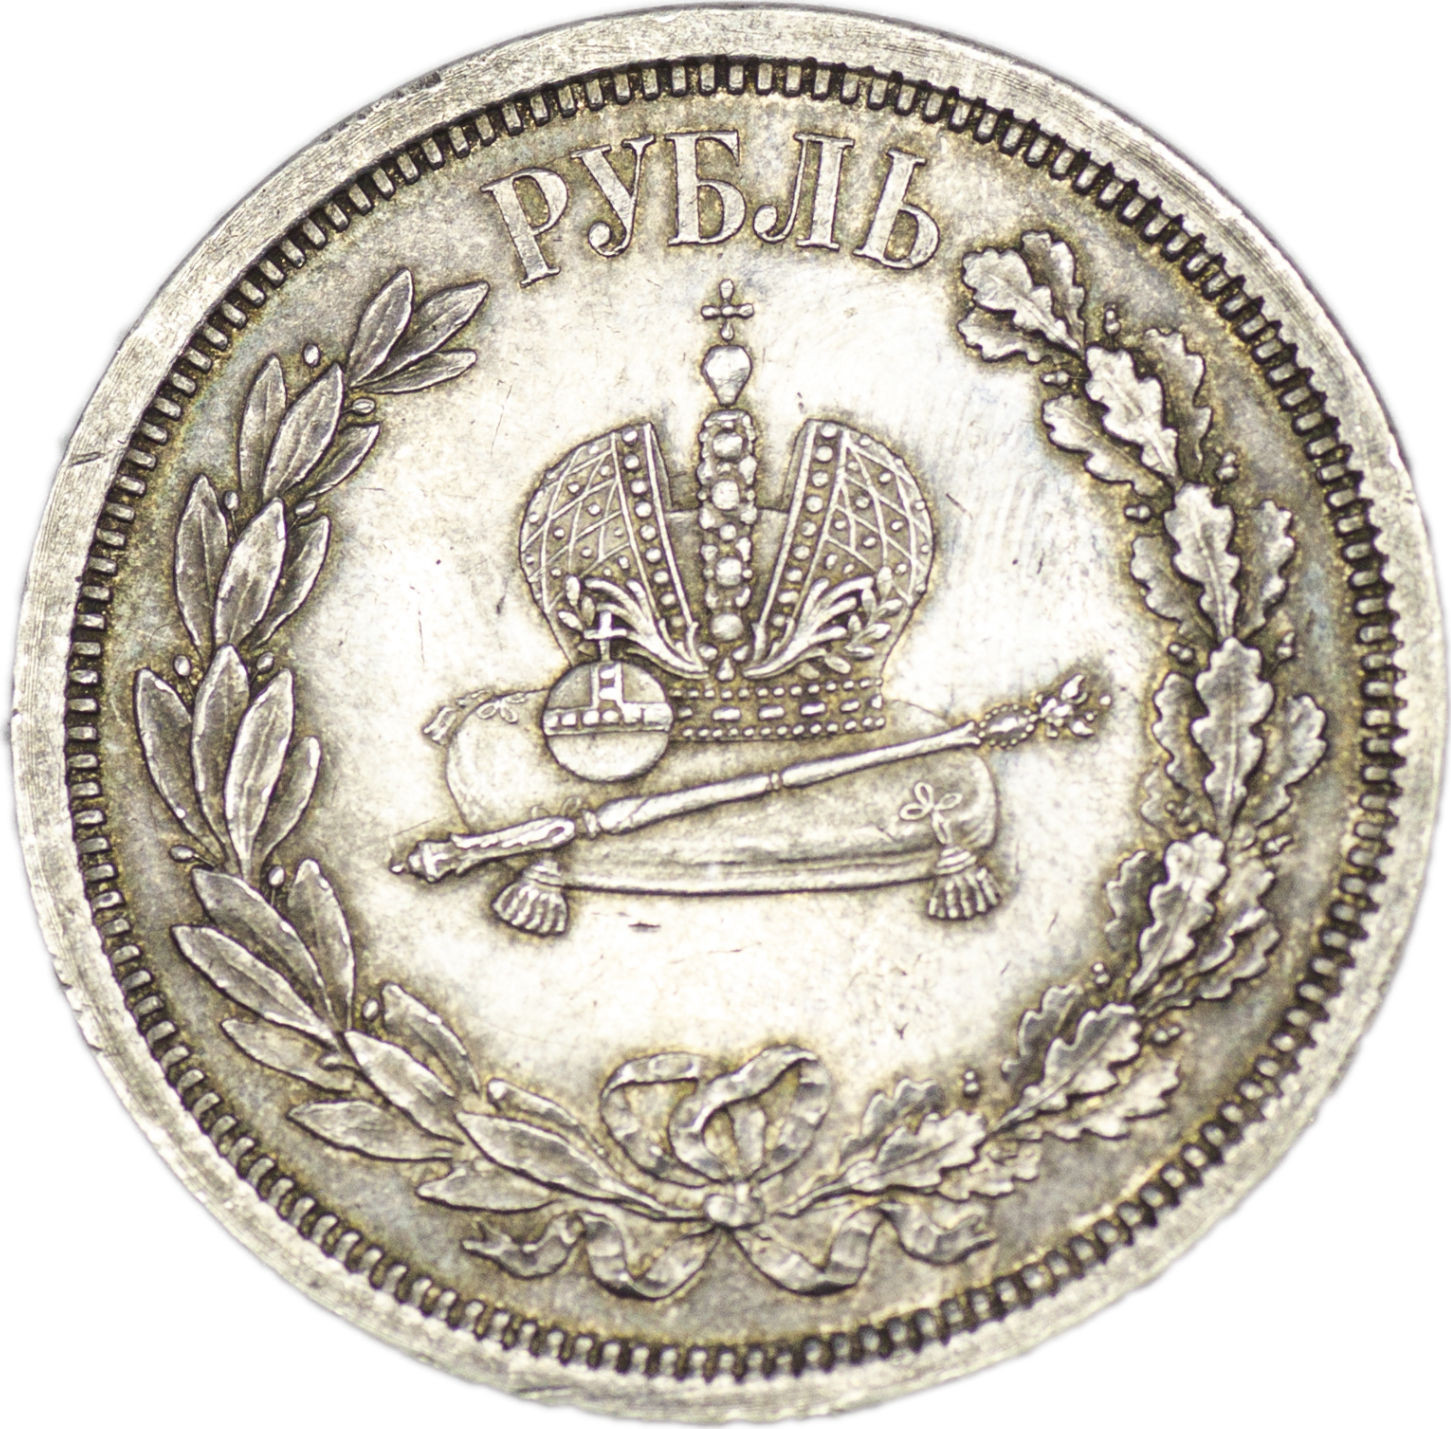 1 рубль 1883 года Александр III Коронован в Москве